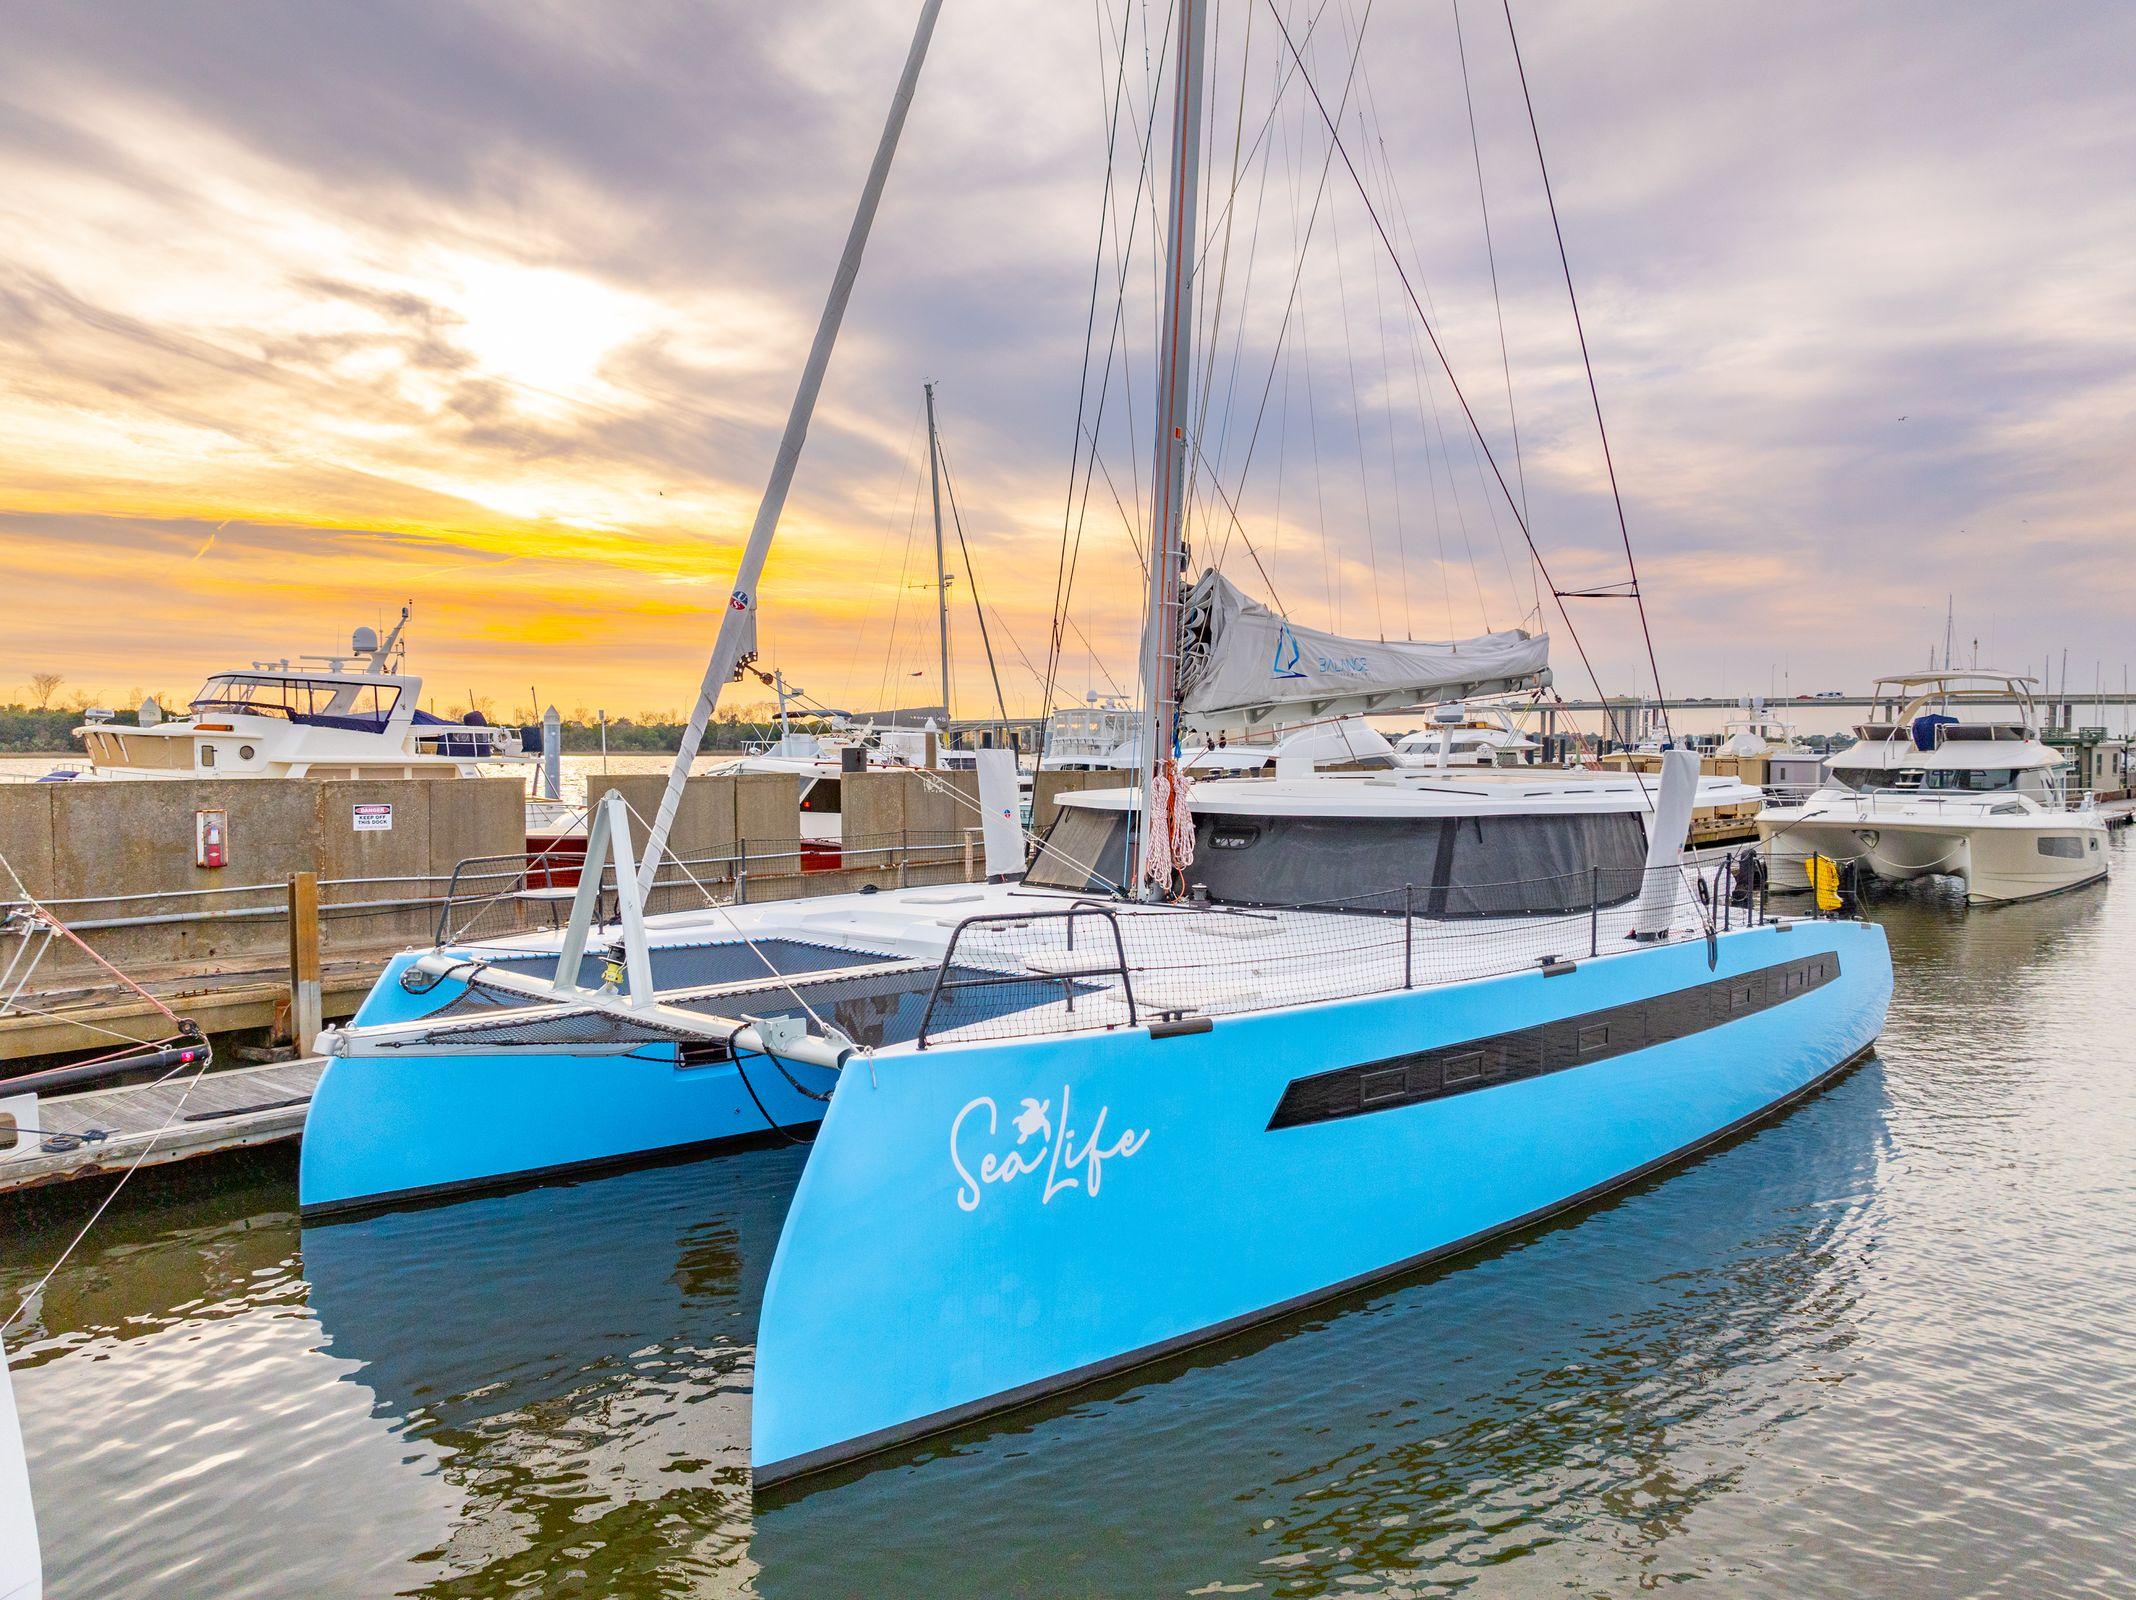 Sealife Yacht for Sale, 48 Balance Yachts Charleston, SC